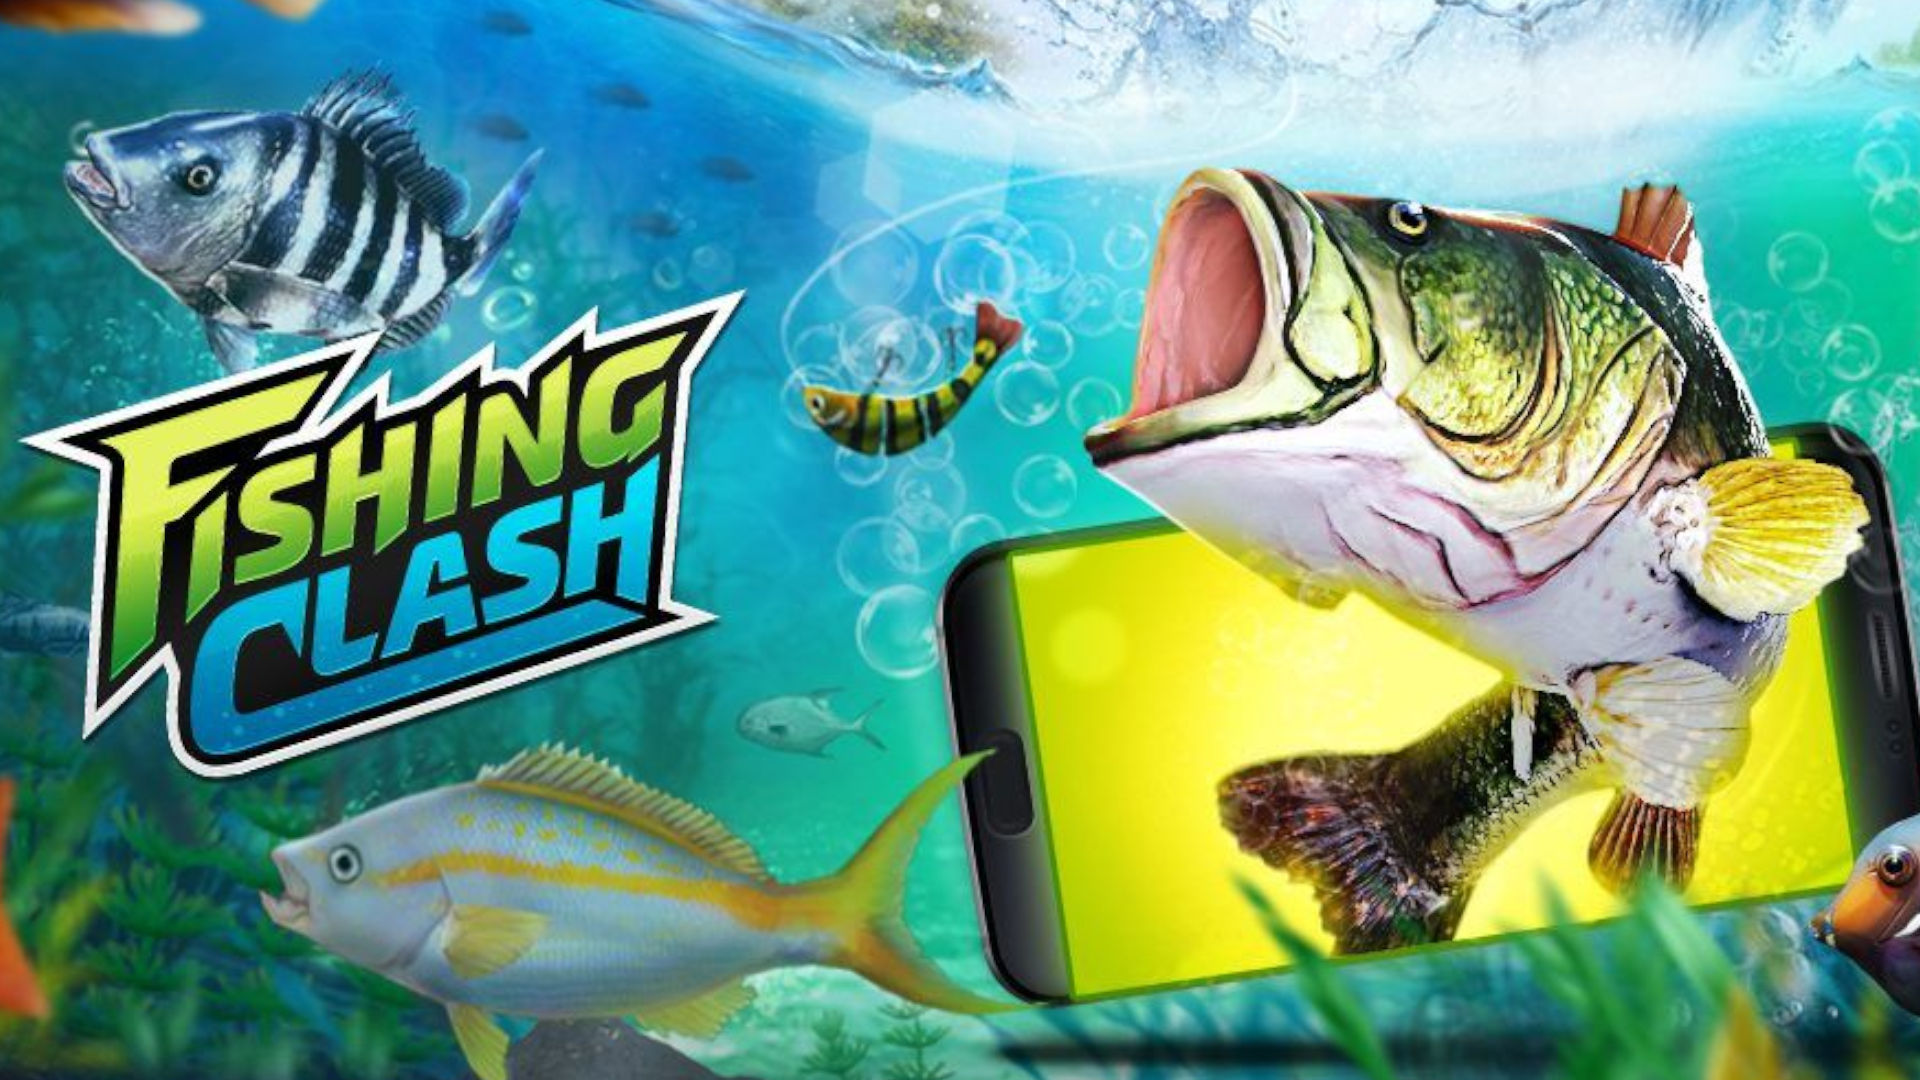 Fishing-Games.info — Website Sold on Flippa: Fishing Games Online